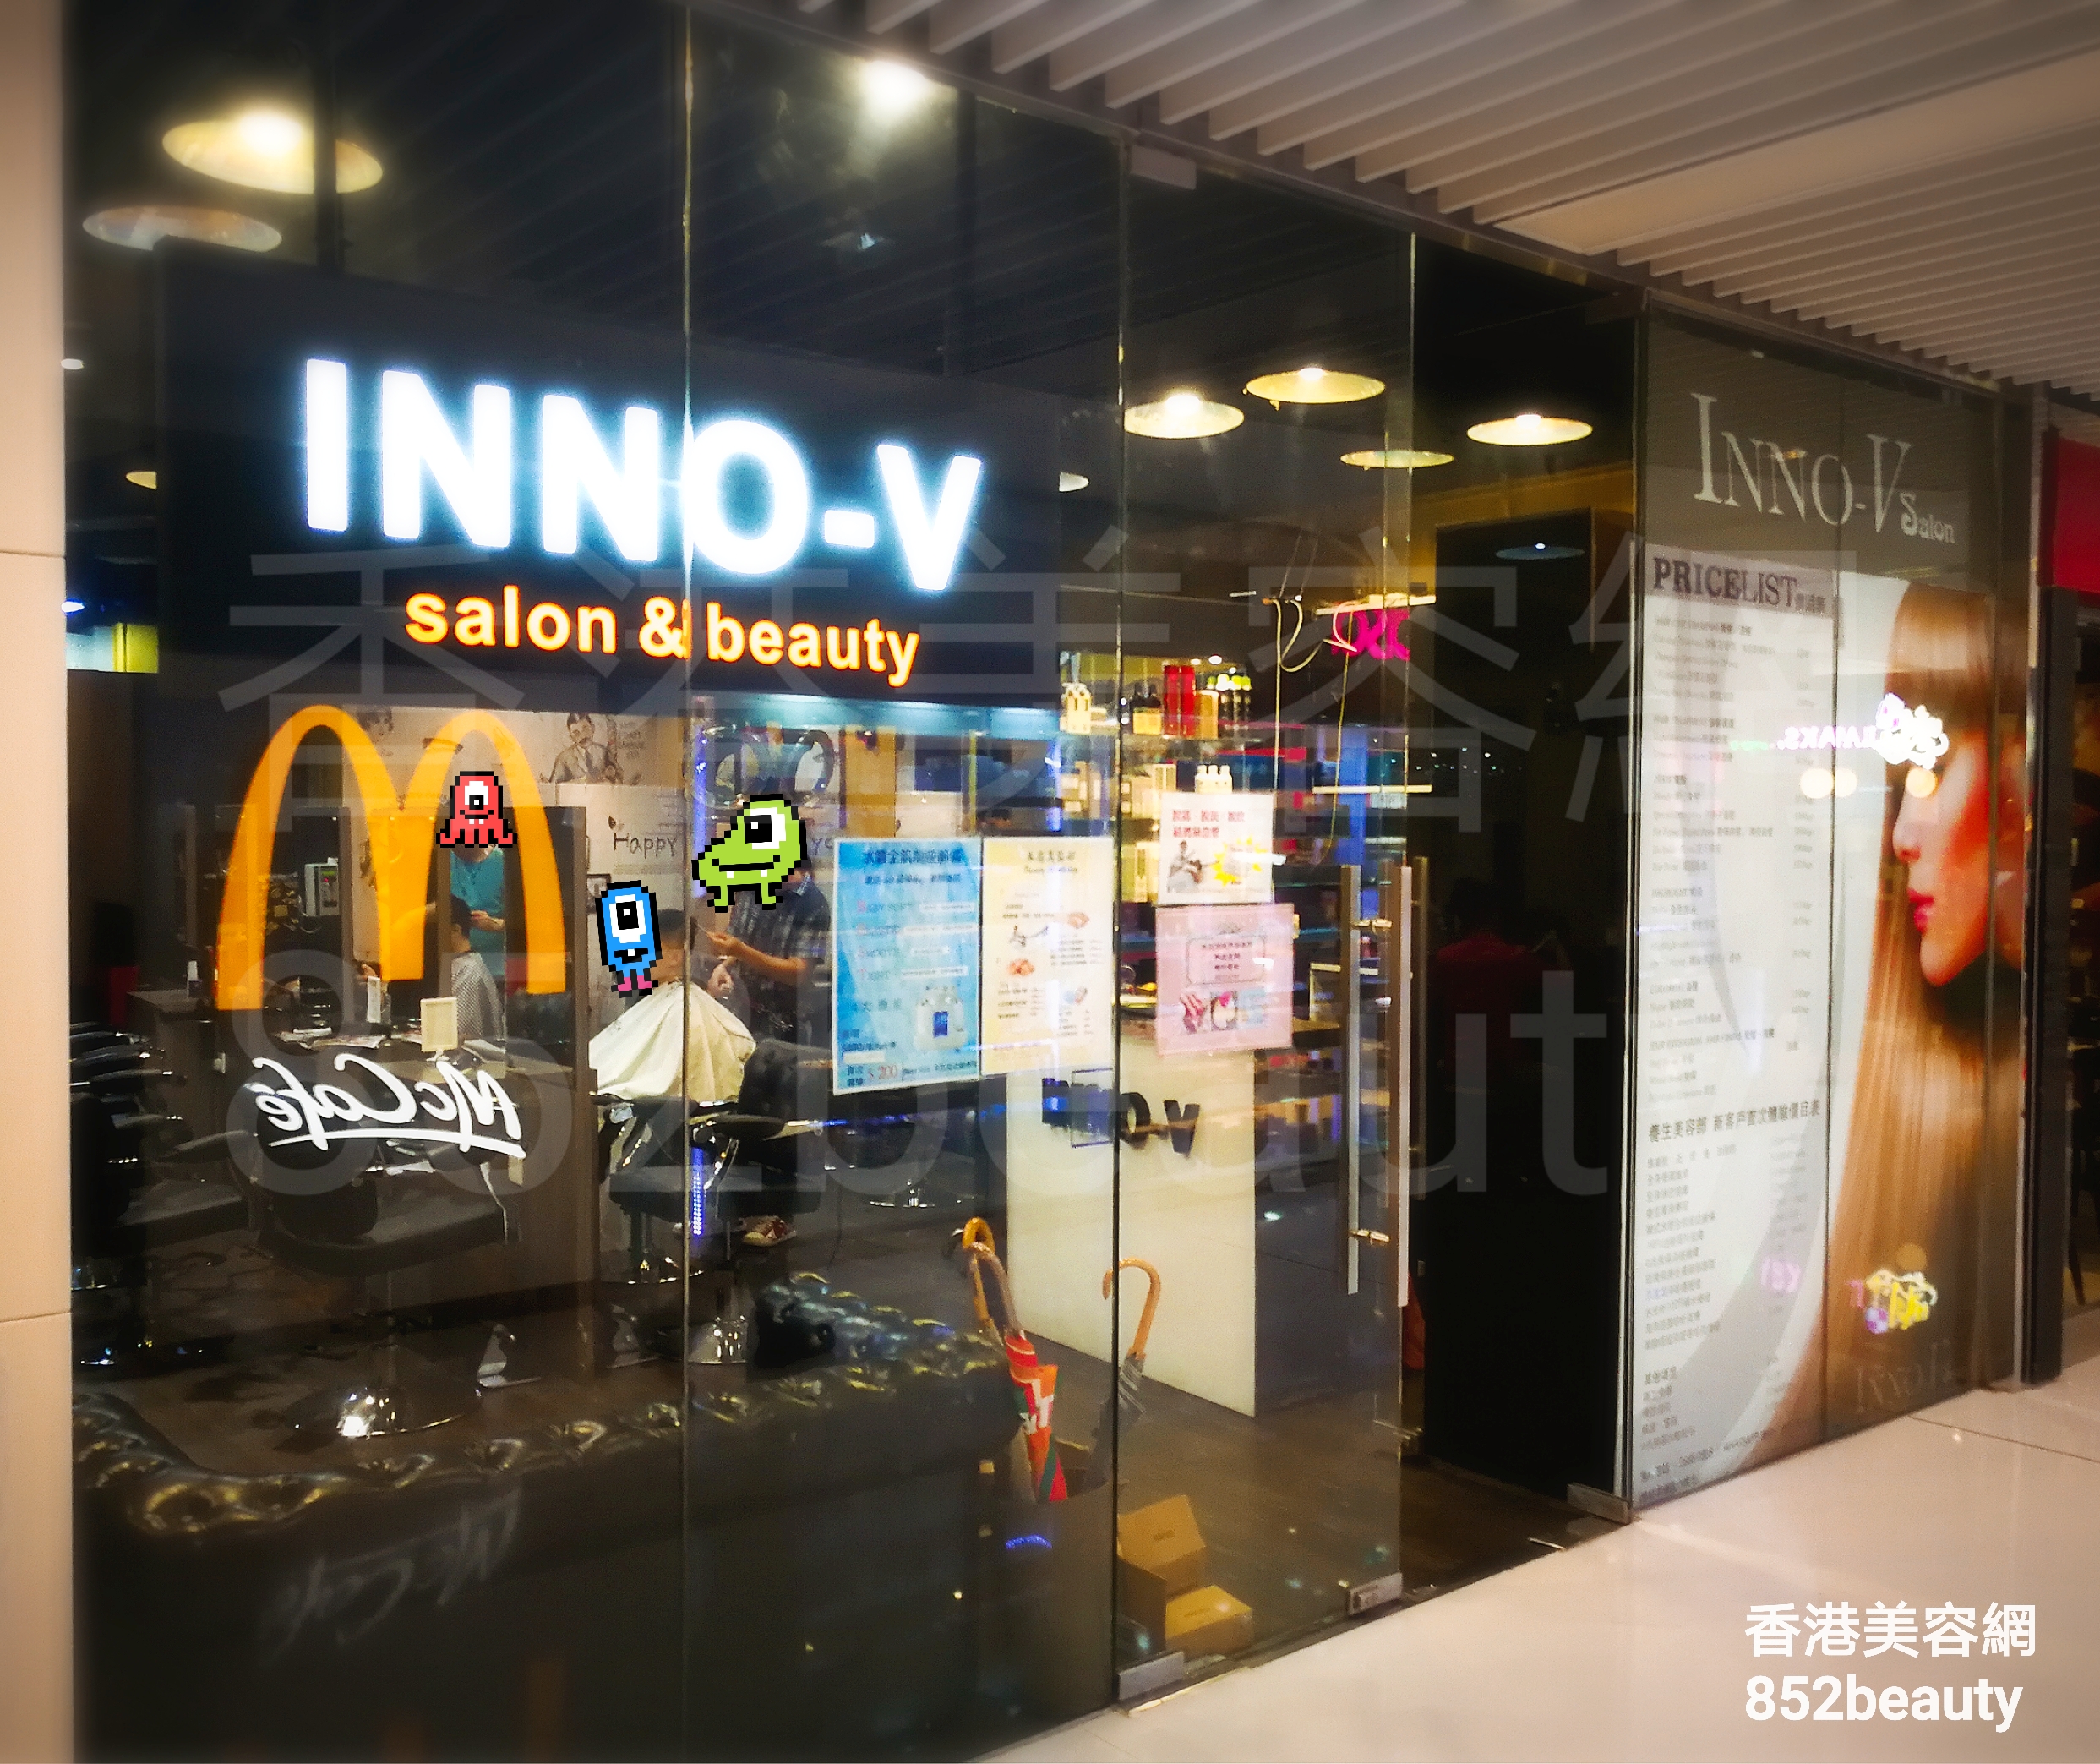 香港美容網 Hong Kong Beauty Salon 美容院 / 美容師: INNO-V salon & beauty 源美軒 纖體美容